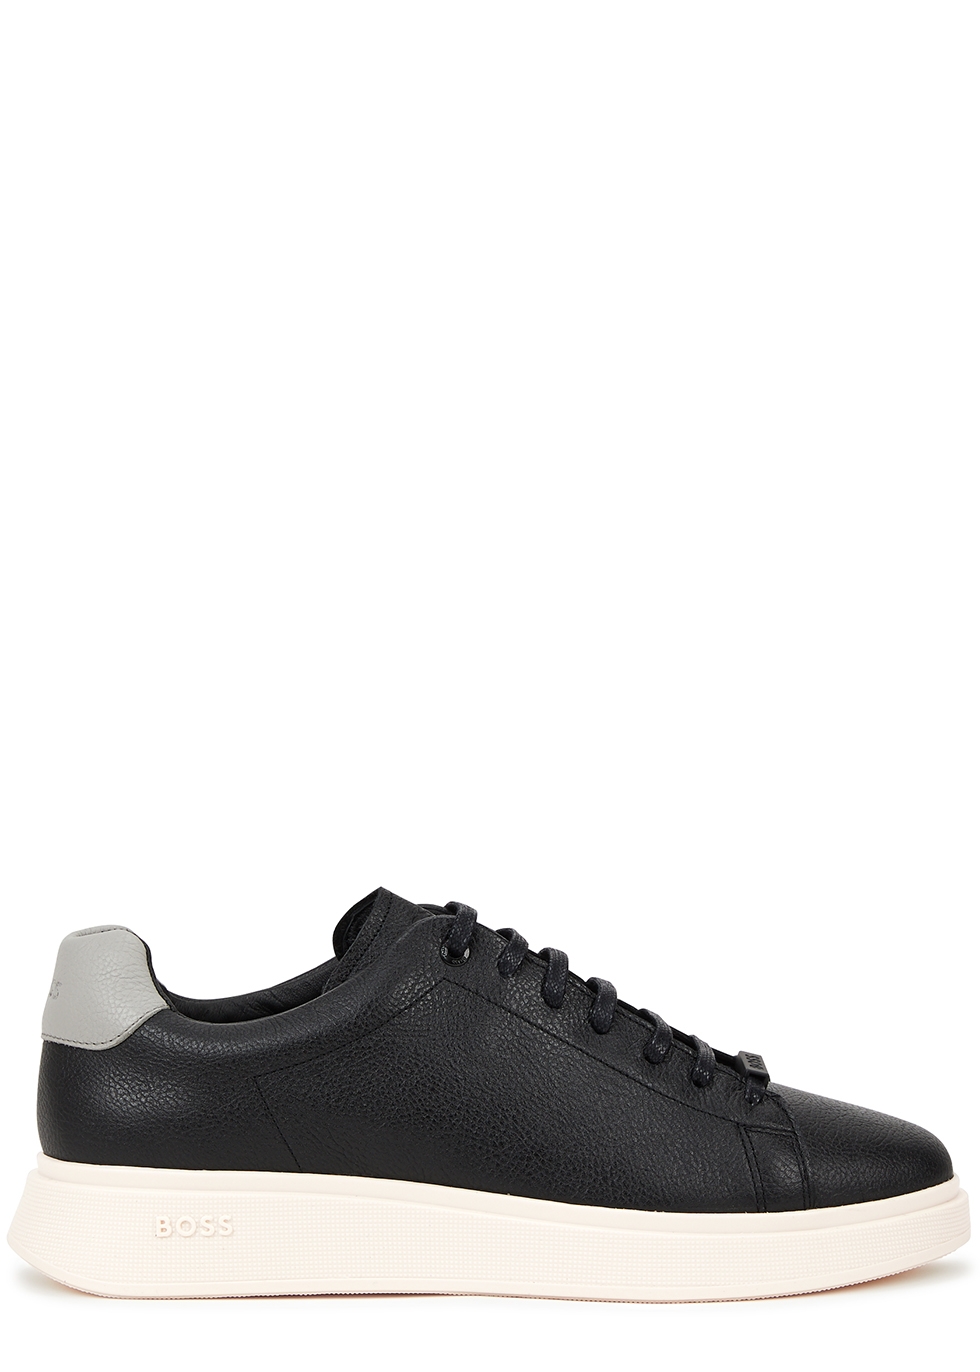 HUGO BOSS Bulton leather sneakers - Harvey Nichols